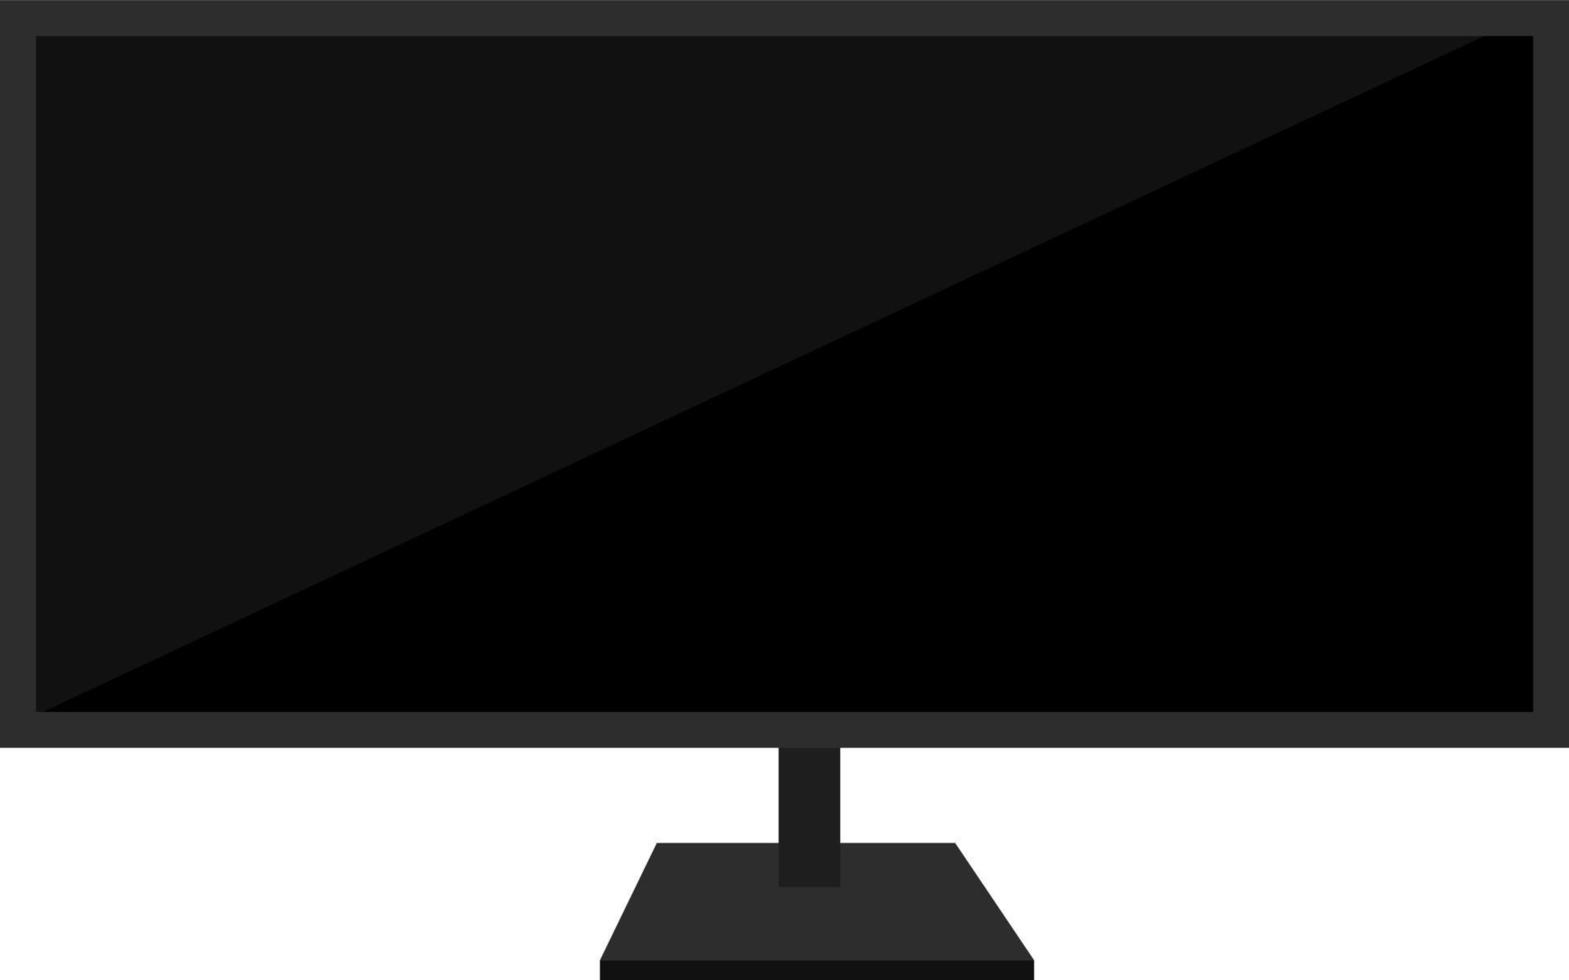 Flat TV ,illustration, vector on white background.